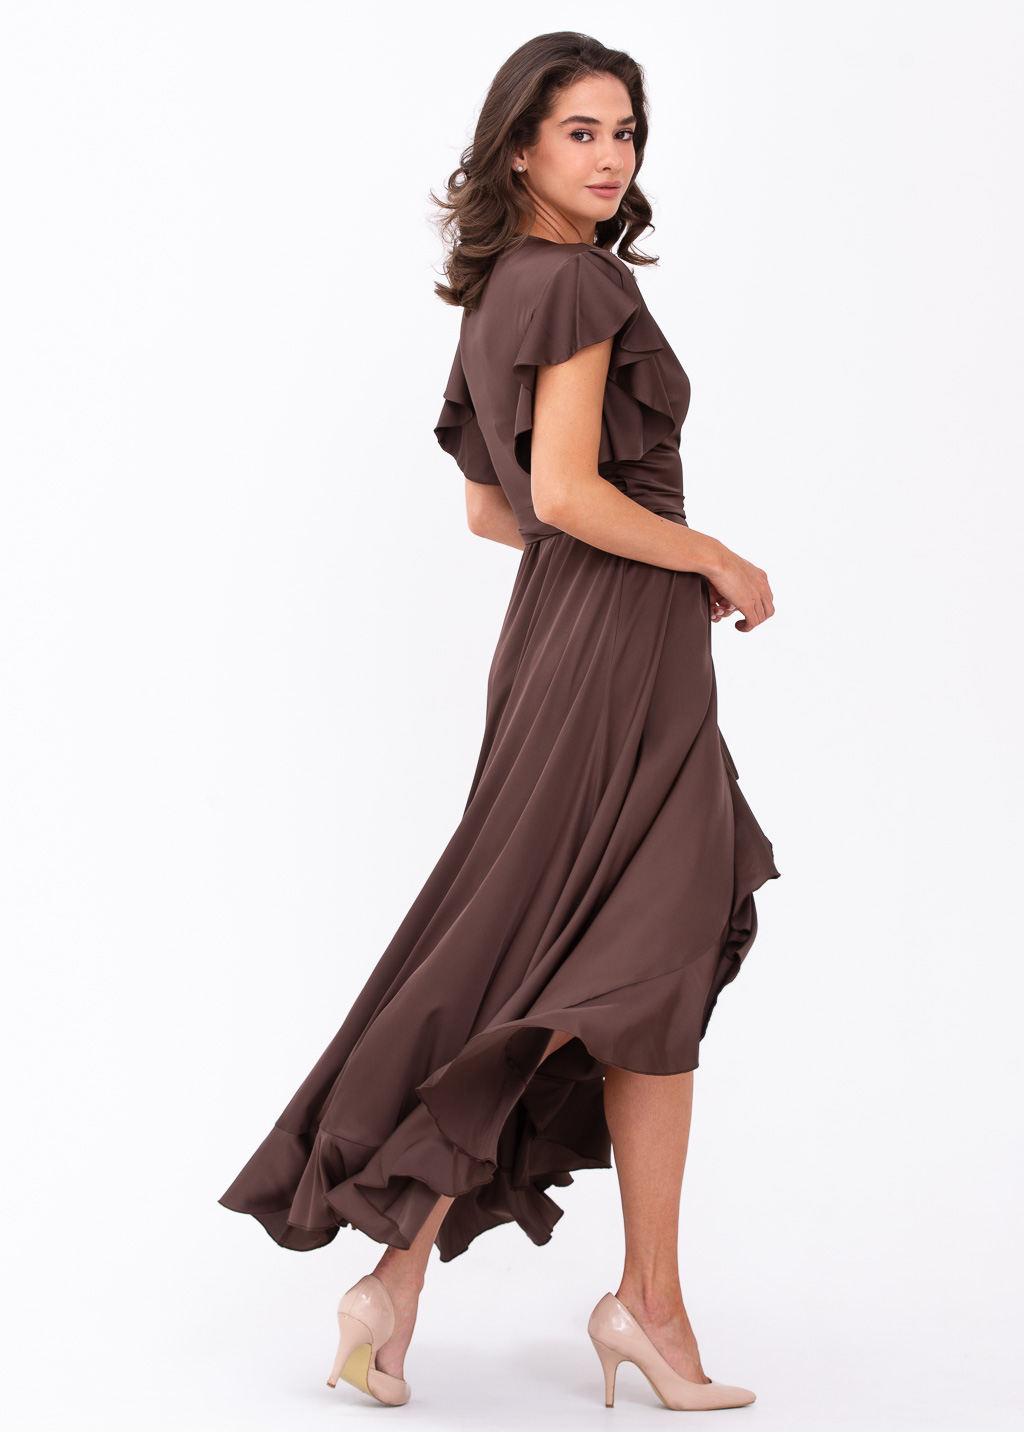 Chocolate brown wrap dress